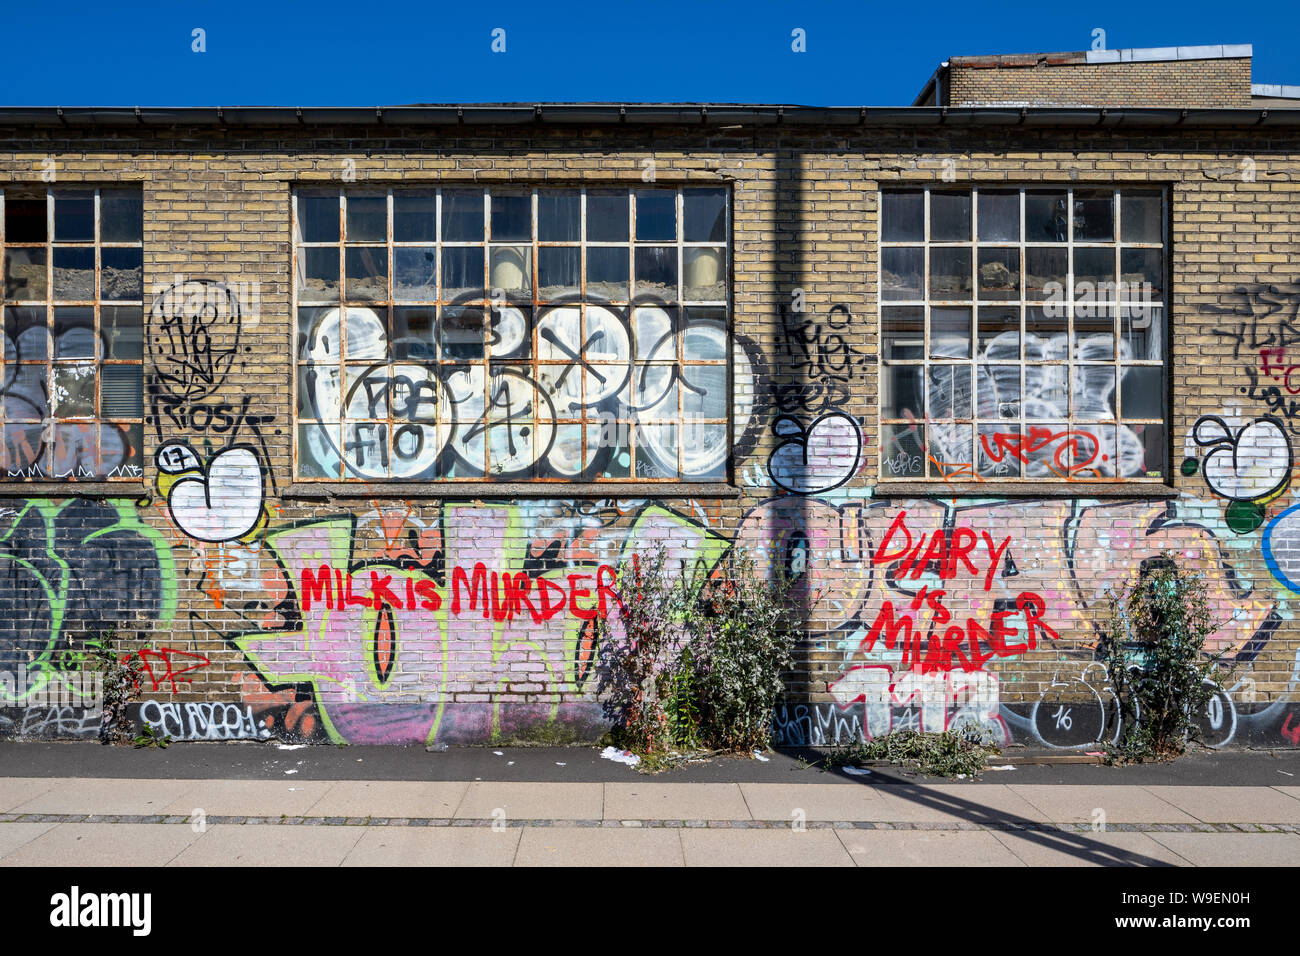 'Milk is murder' and 'Diary is murder' (misspelled), graffiti on old industrial building in Titangade, Copenhagen, Denmark Stock Photo